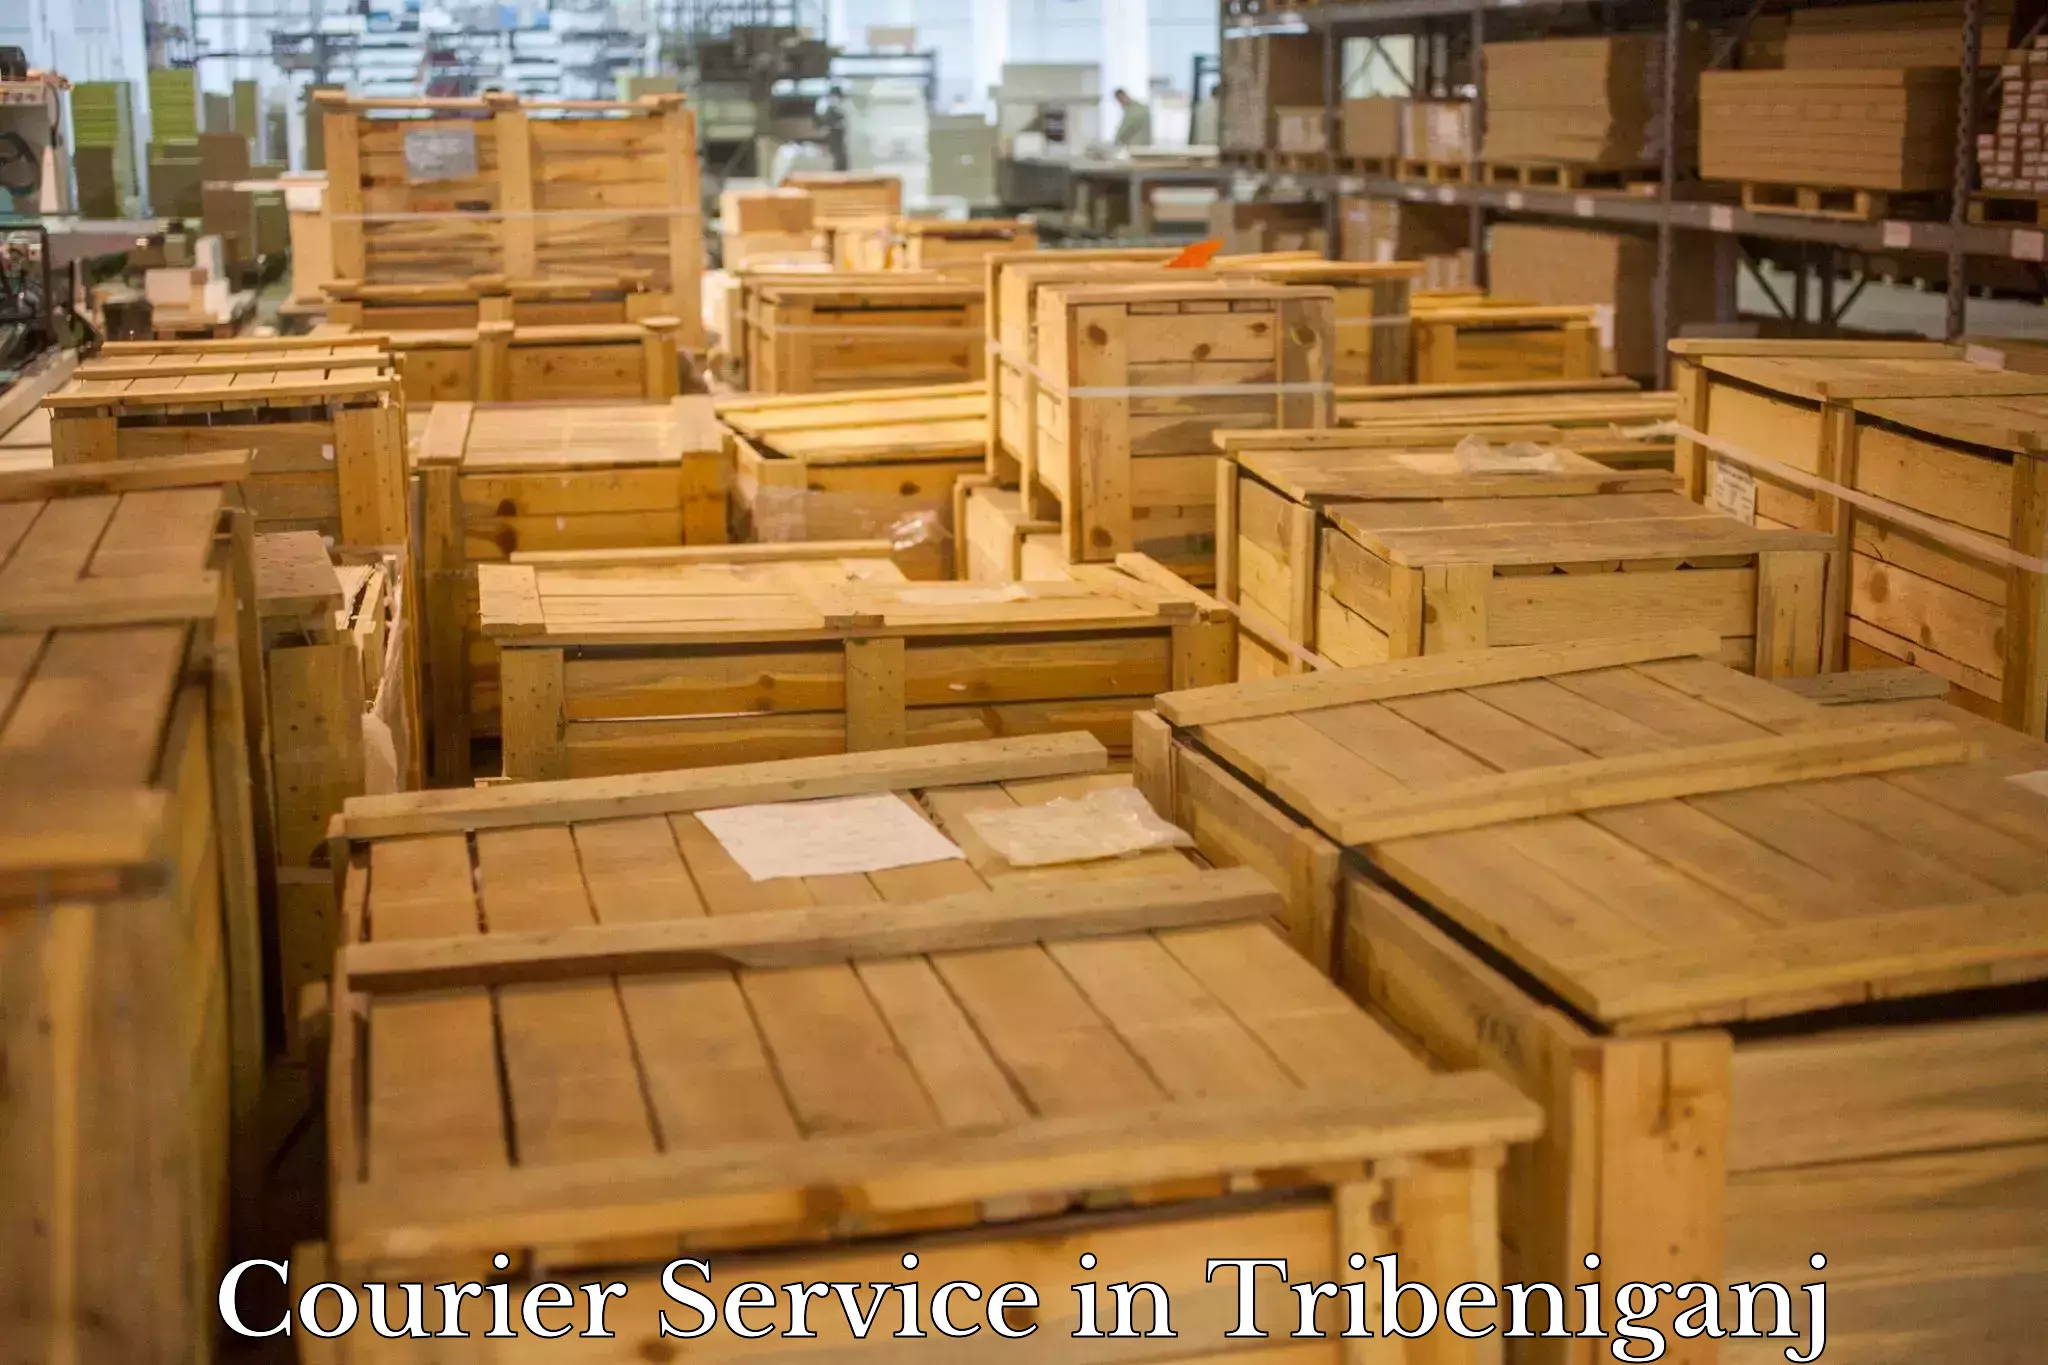 Courier service partnerships in Tribeniganj